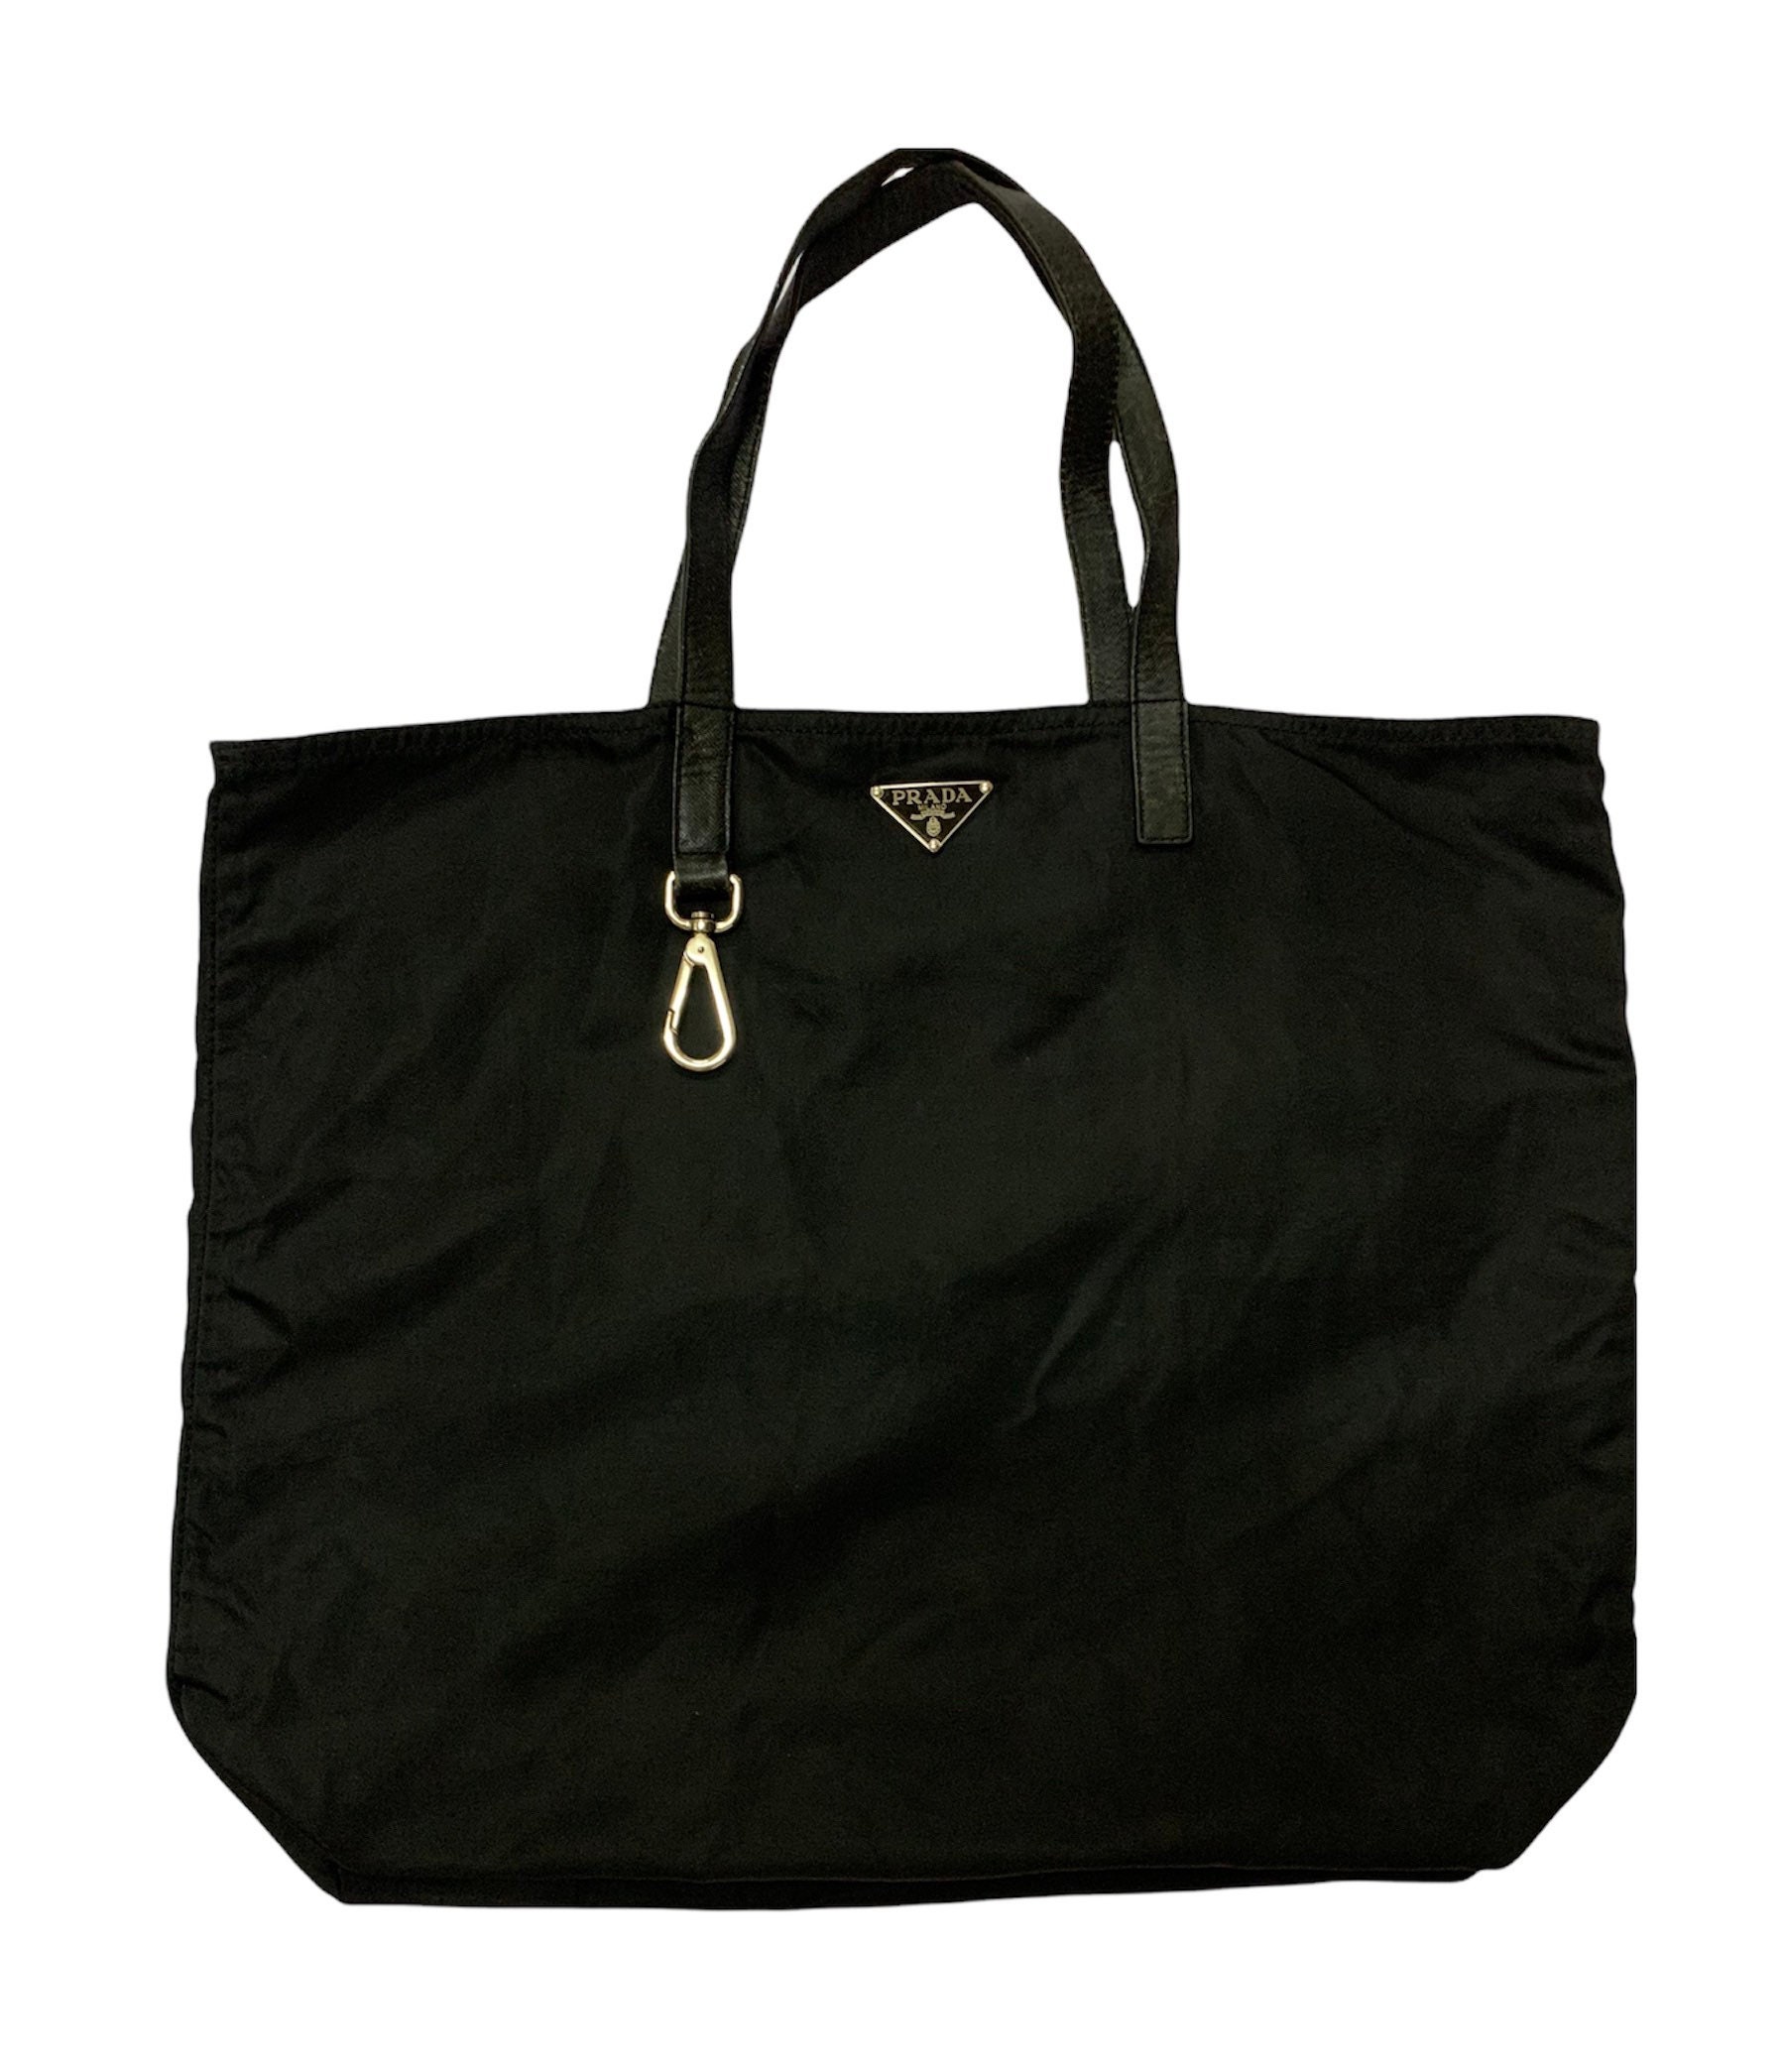 Authentic PRADA 2Way Shoulder Bag Hand Bag Black Nylon #f23719